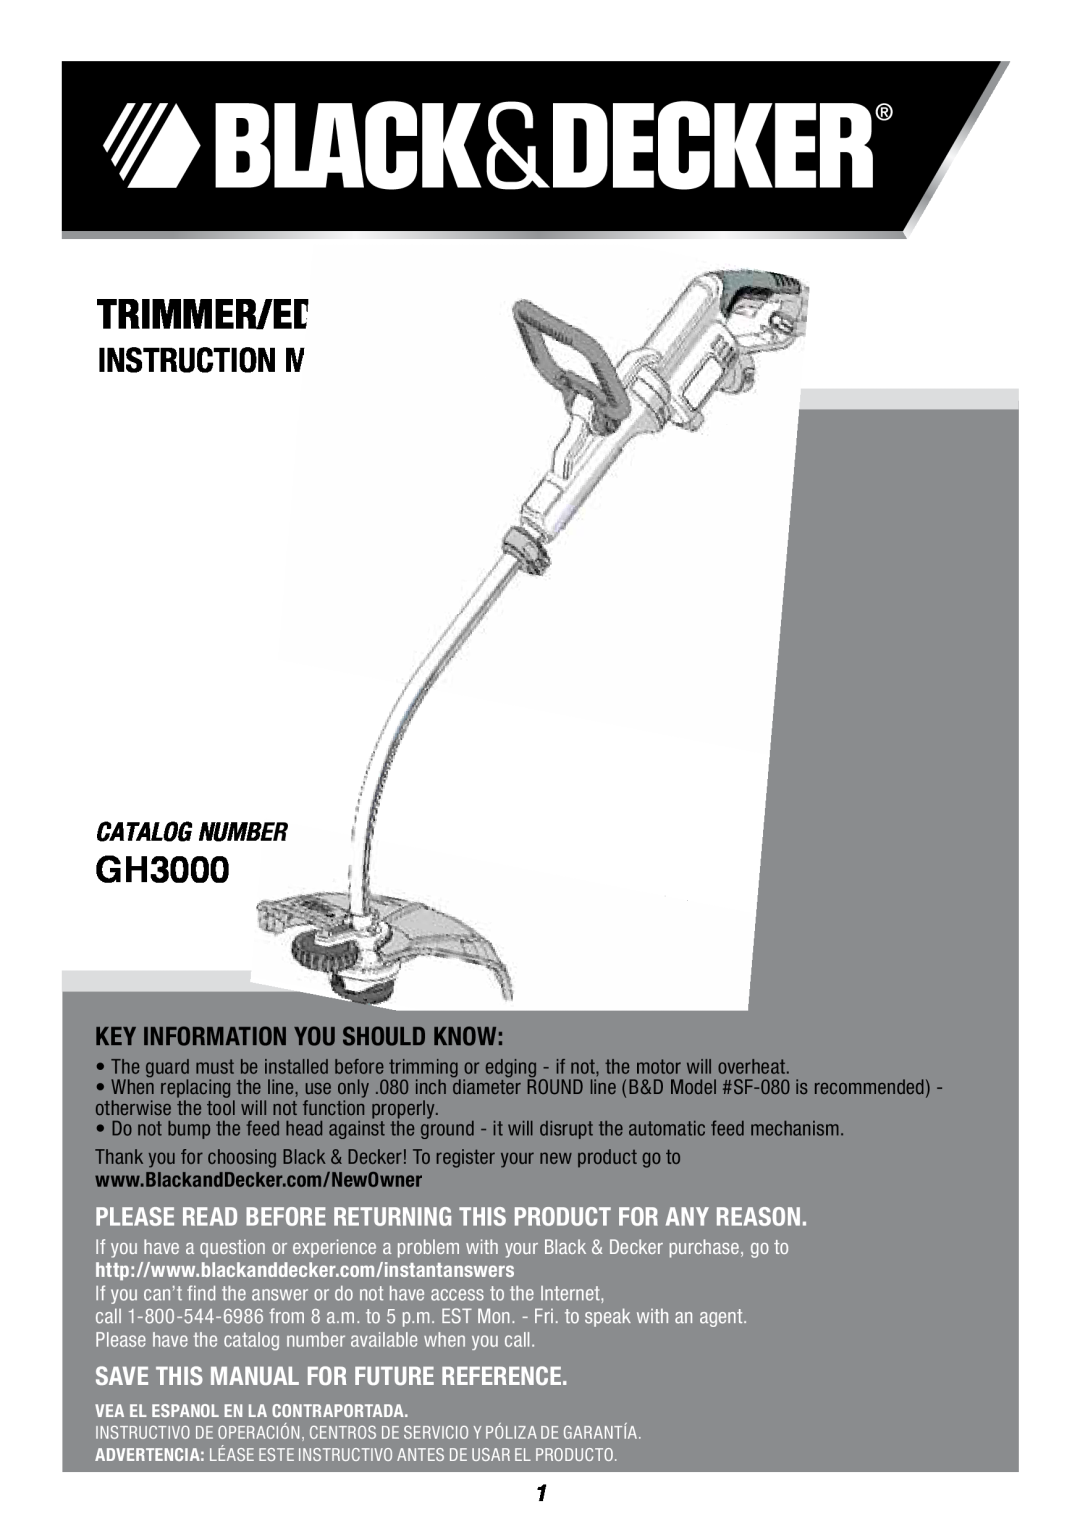 Black & Decker SF-080 instruction manual GH3000, Trimmer/Edger, Instruction Manual, Catalog Number 